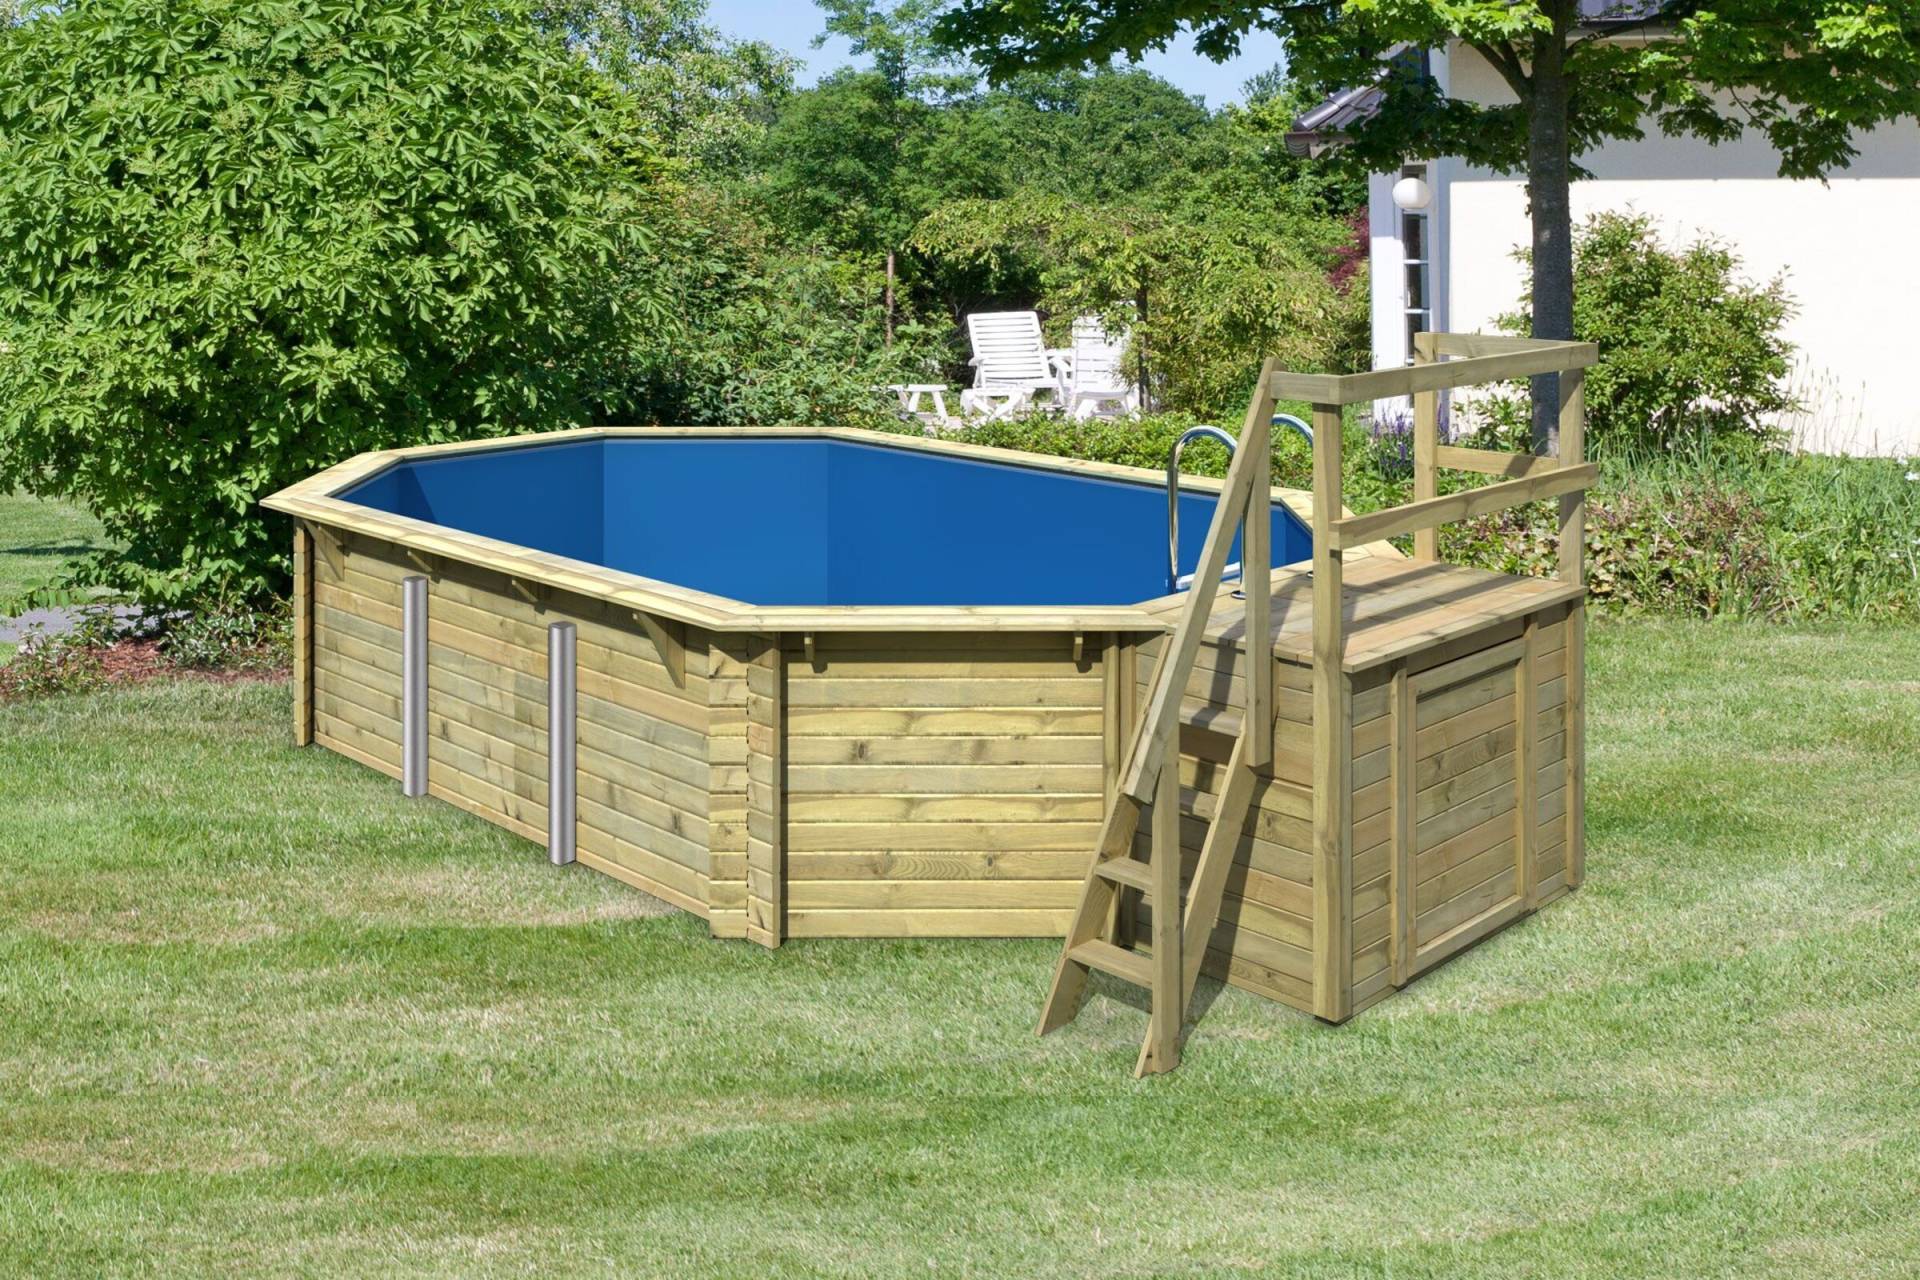 KARIBU Modell 4 Classic kdi Pool, naturbelassen, Fichtenholz, 569x358x124 cm, inkl. Deck, Terrasse und Treppe von Karibu